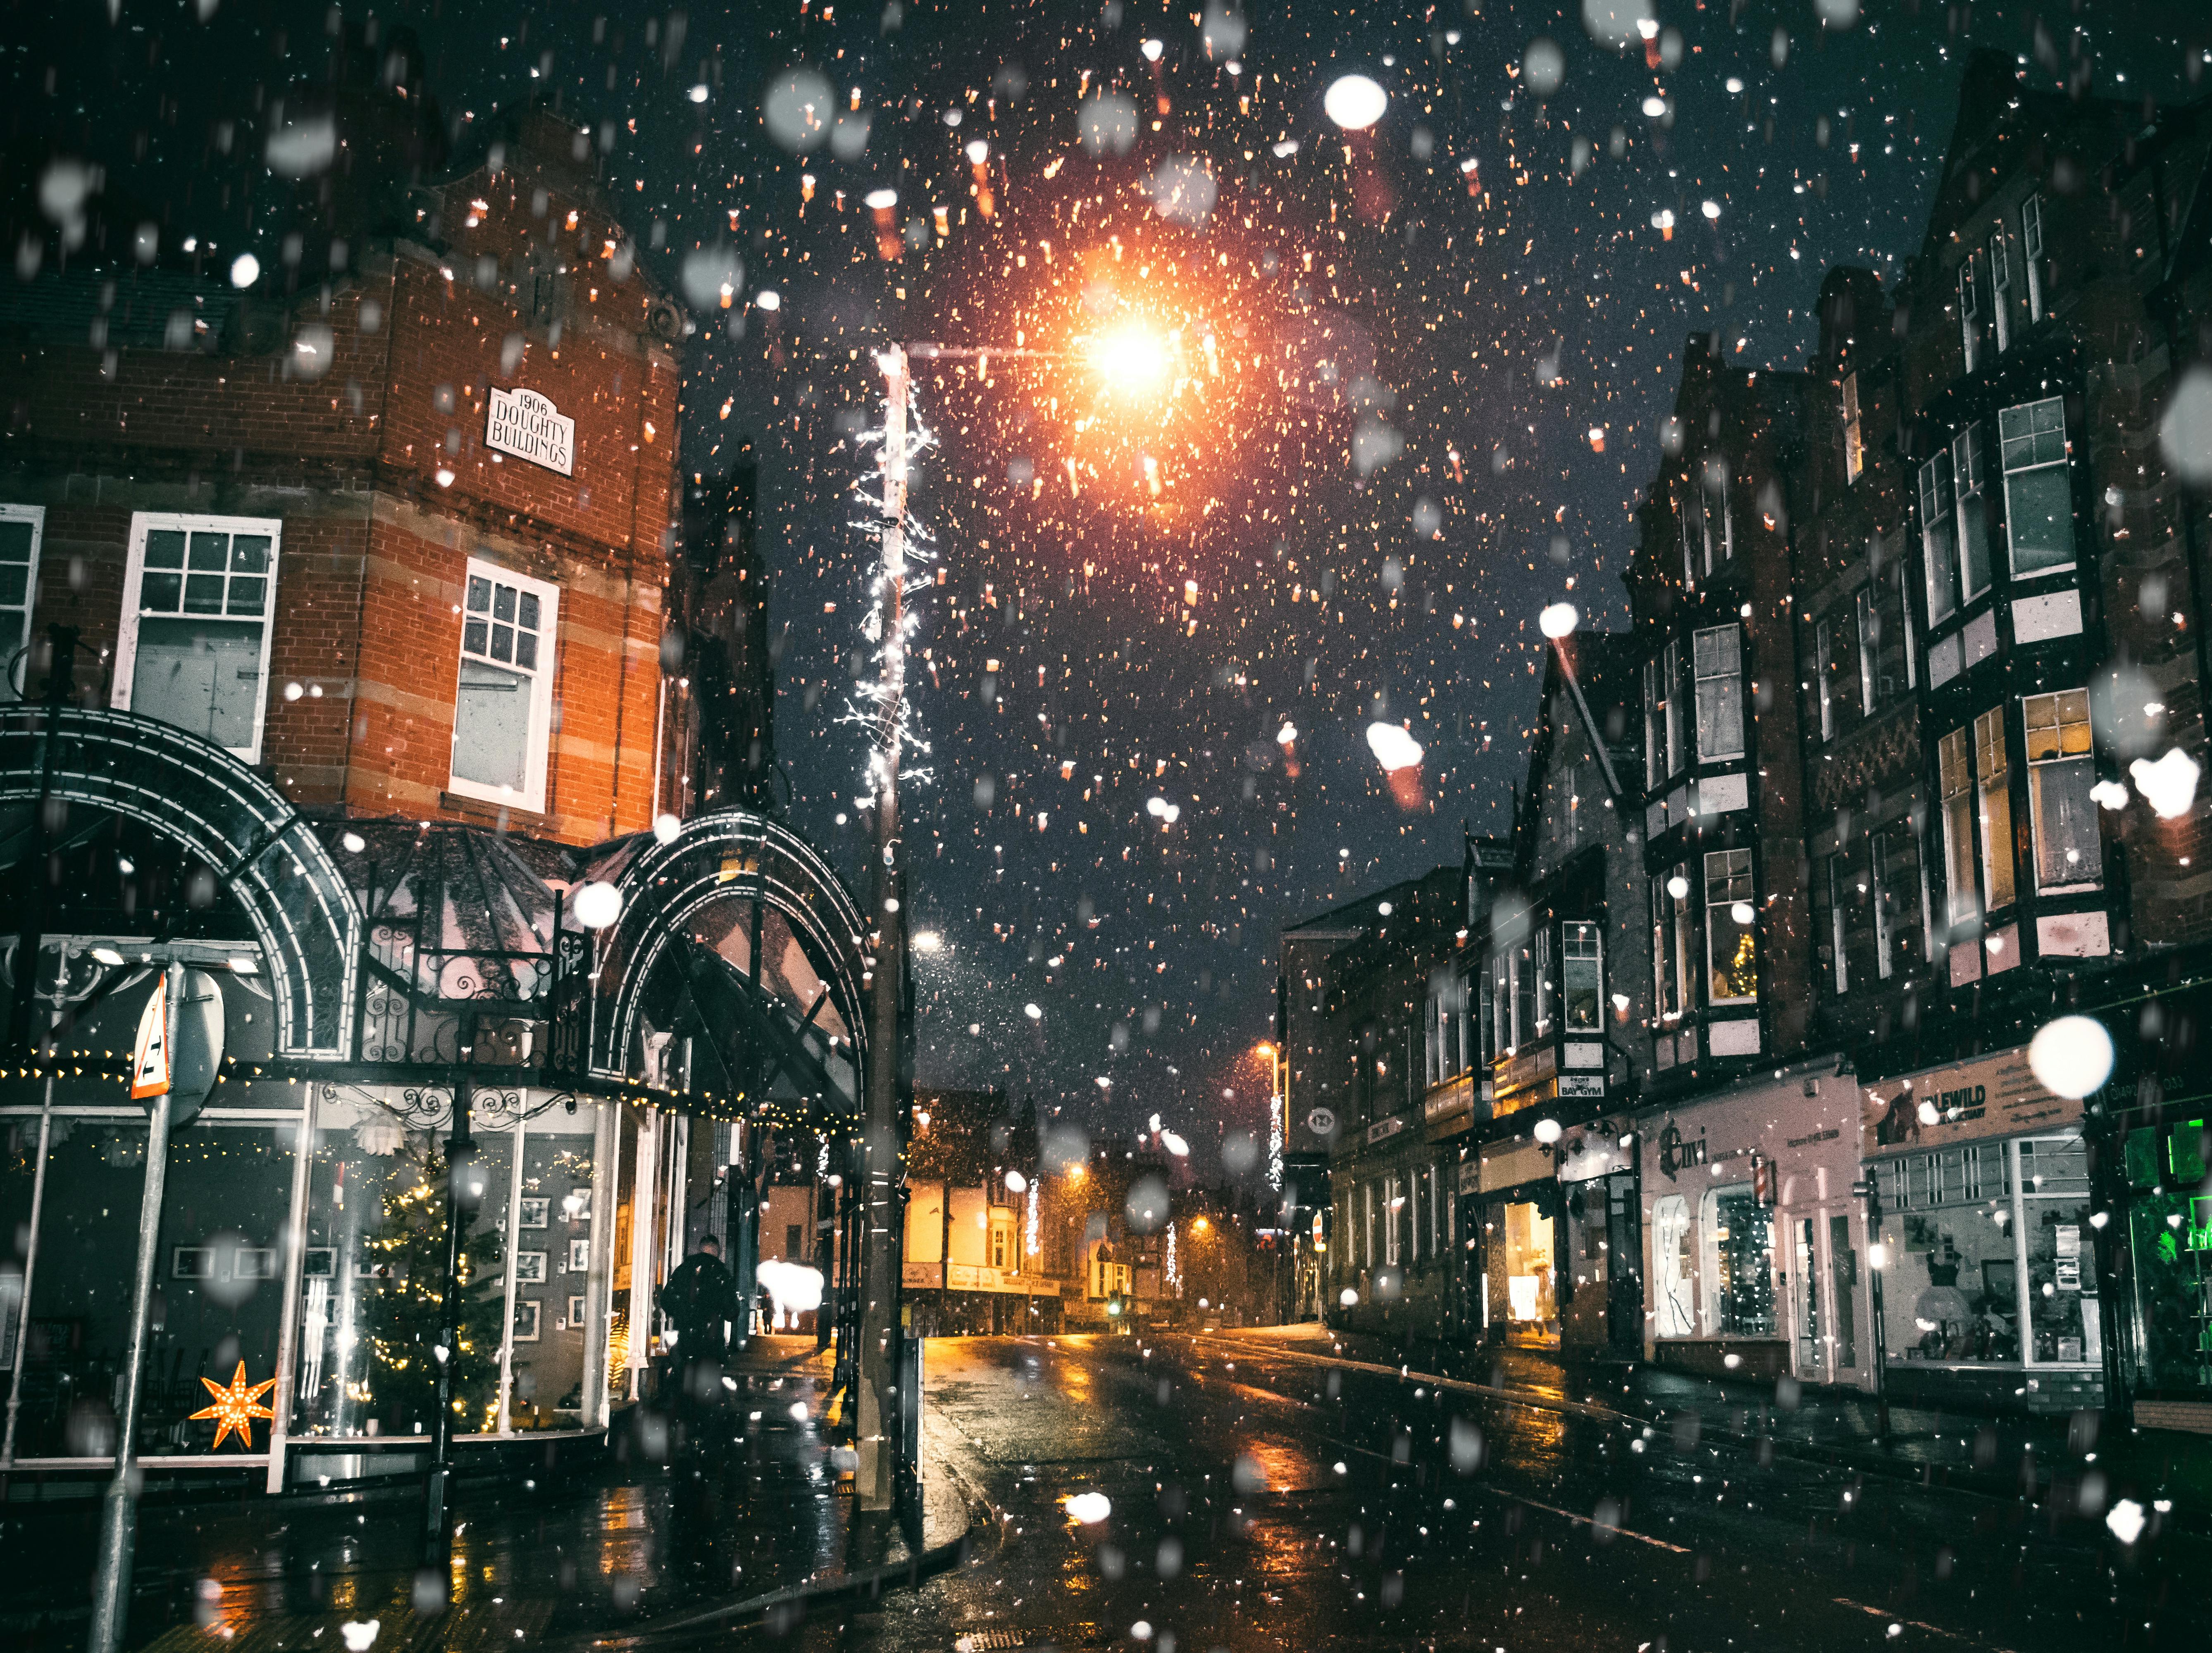 A snowy city street at Christmas